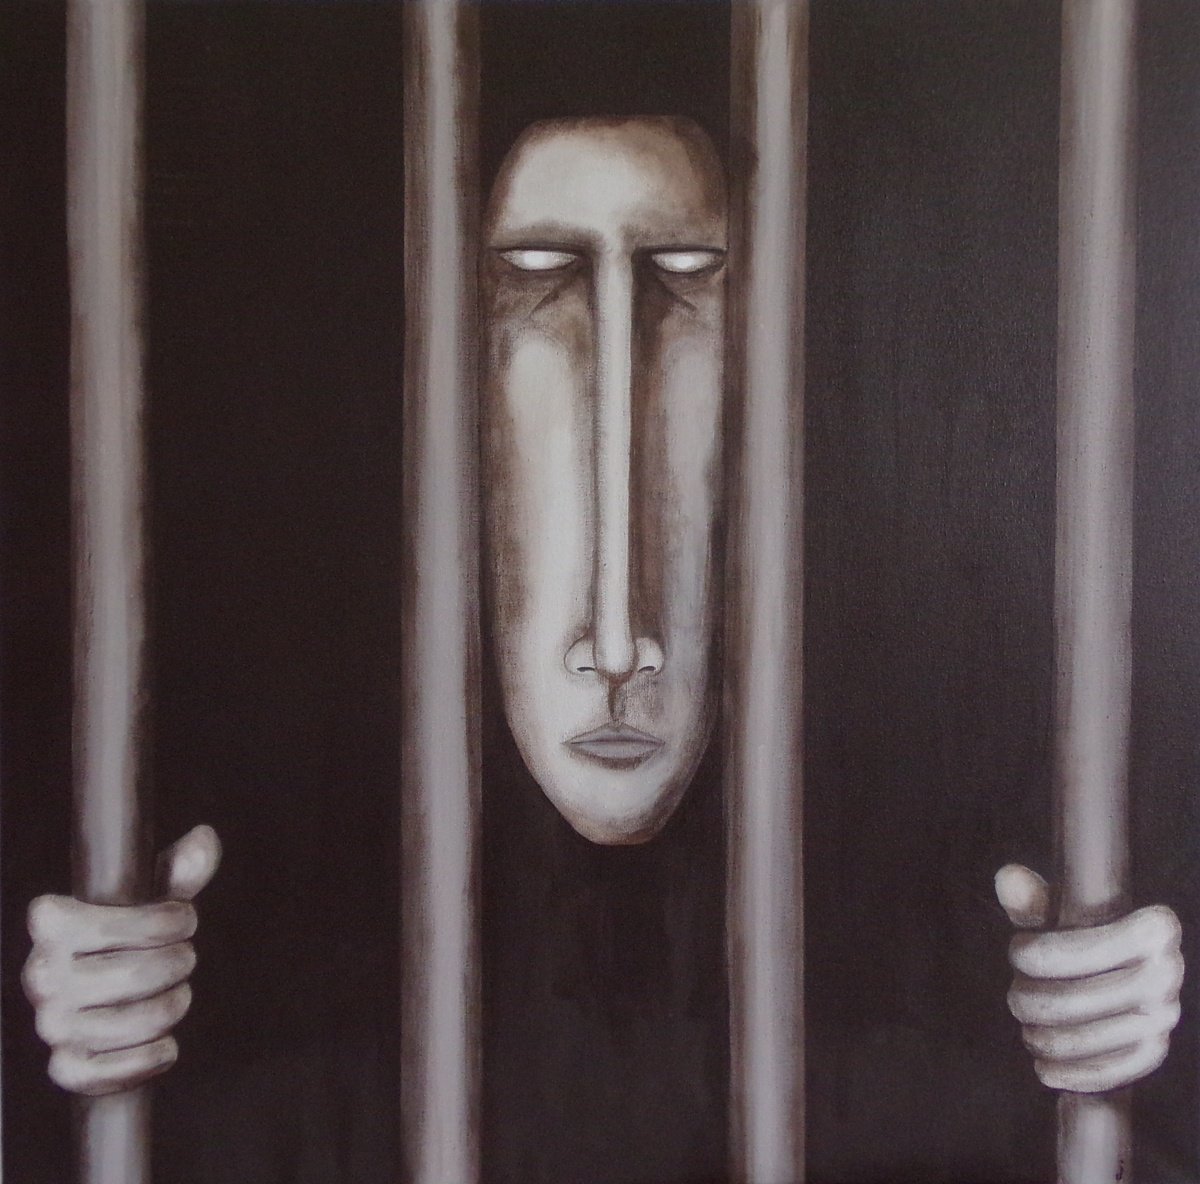 The Prisoner by Jim Manning